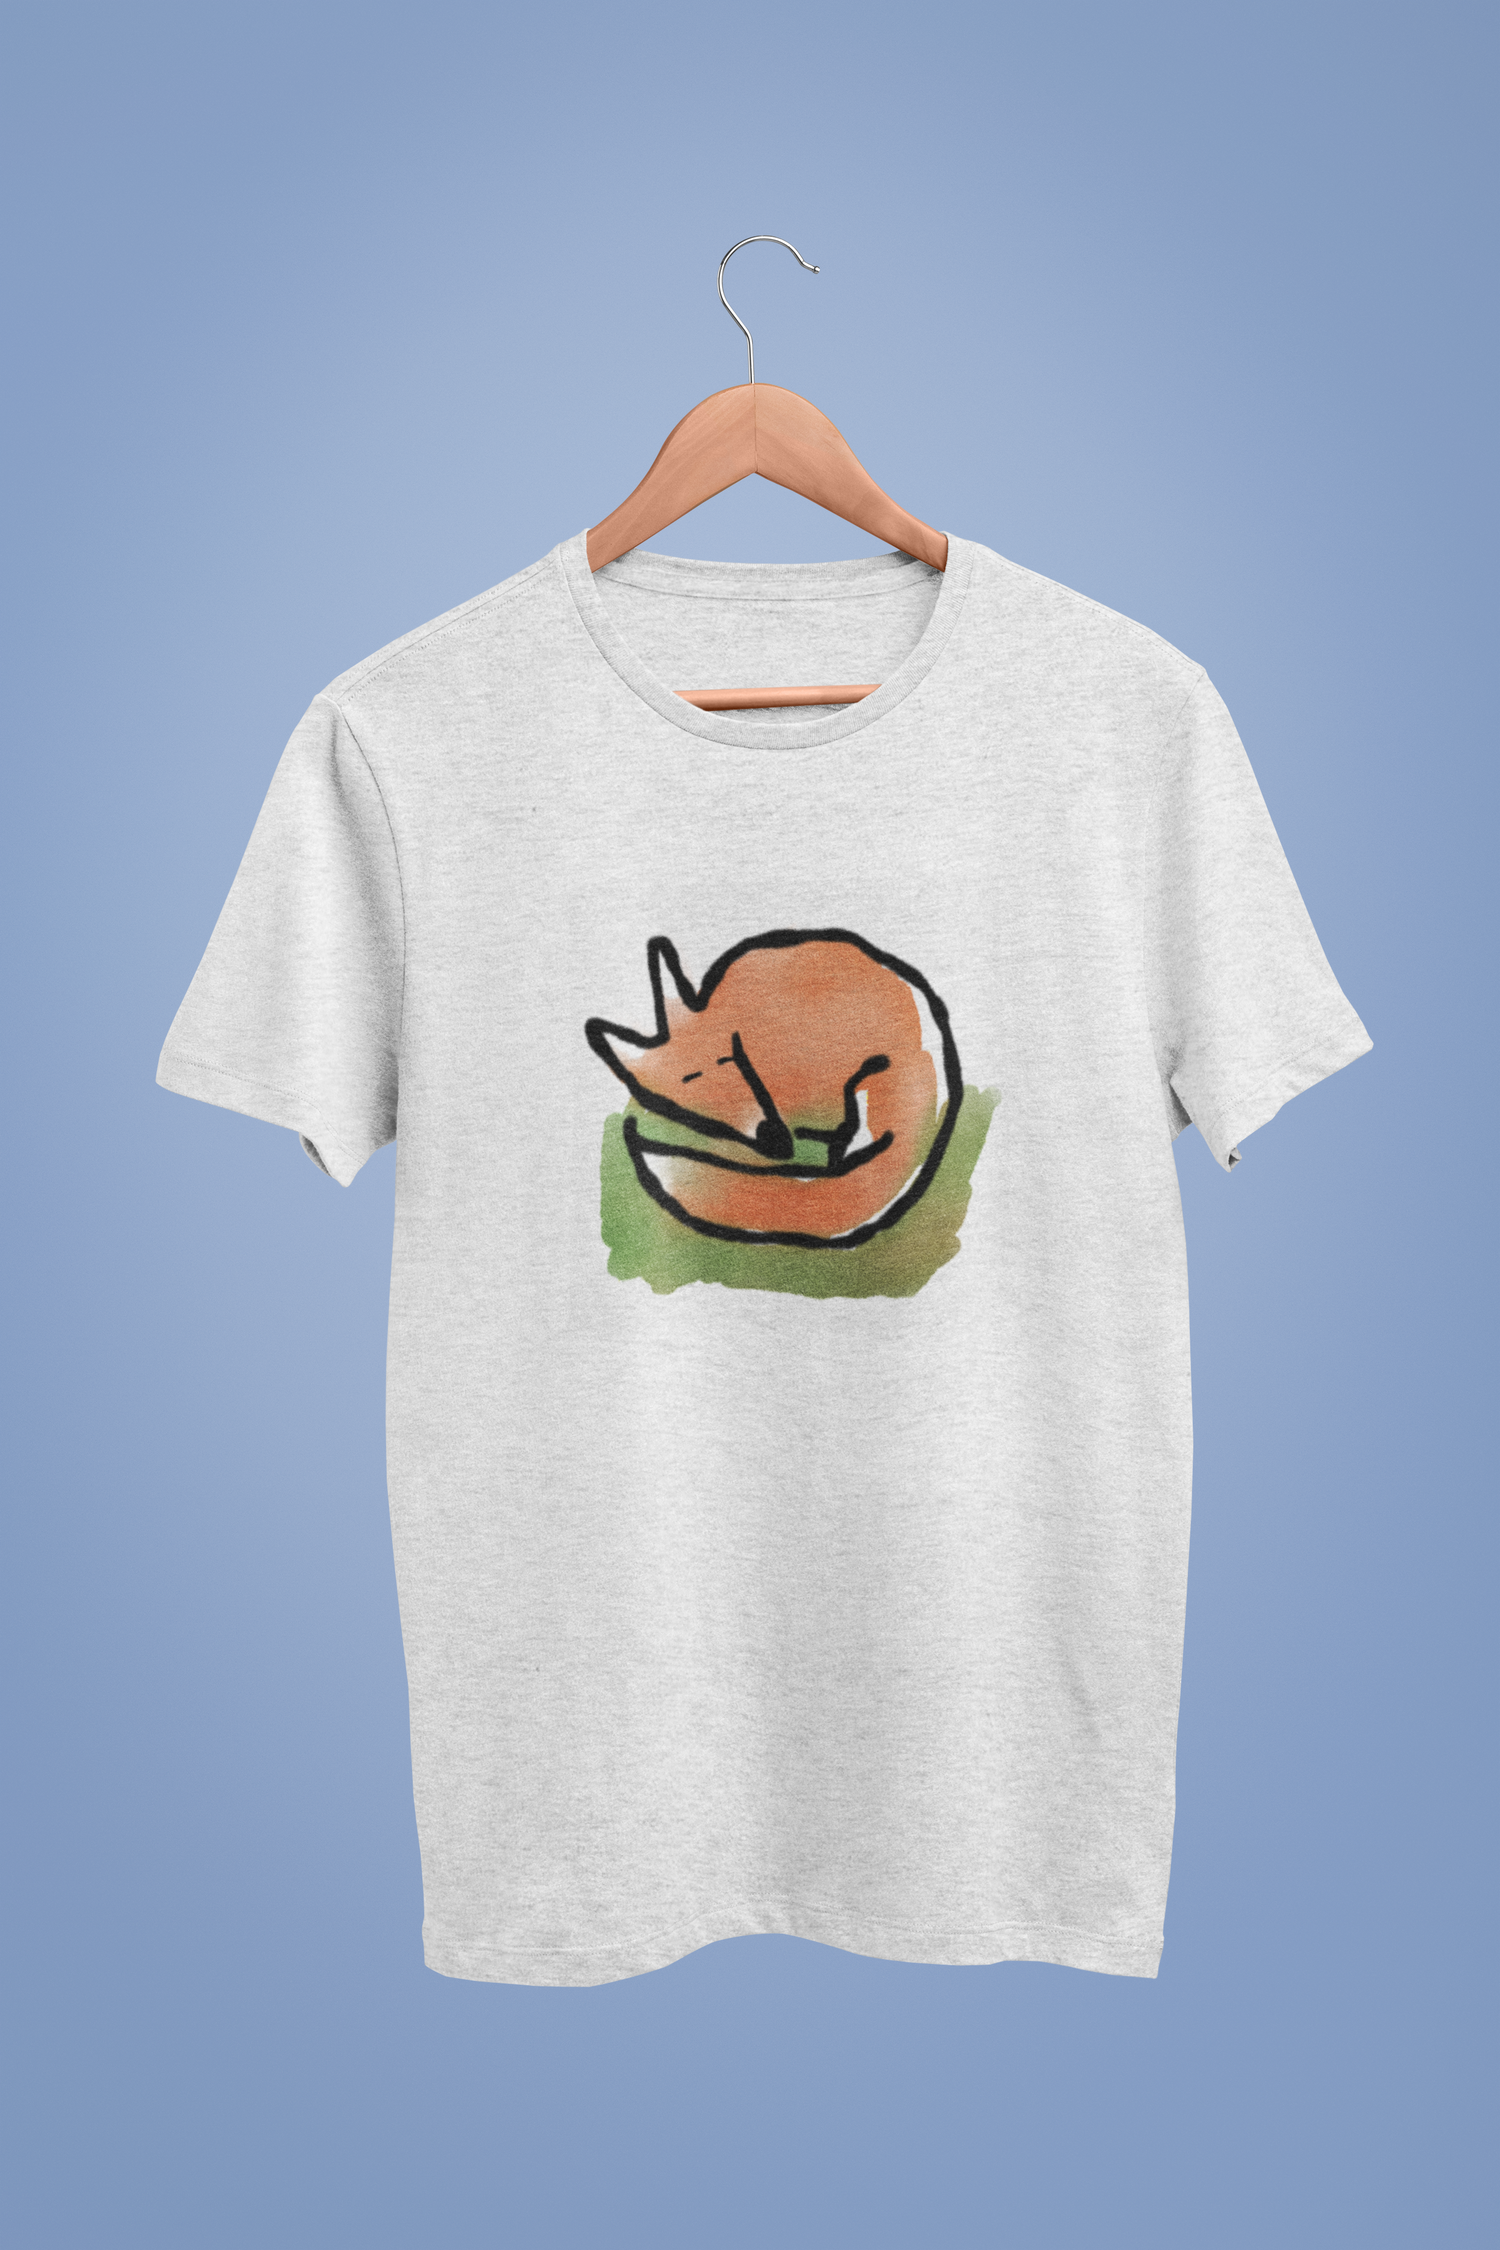 Sleeping Fox T-shirt in mid heather grey vegan cotton. Illustrated original cute fox t-shirt design by Hector and Bone